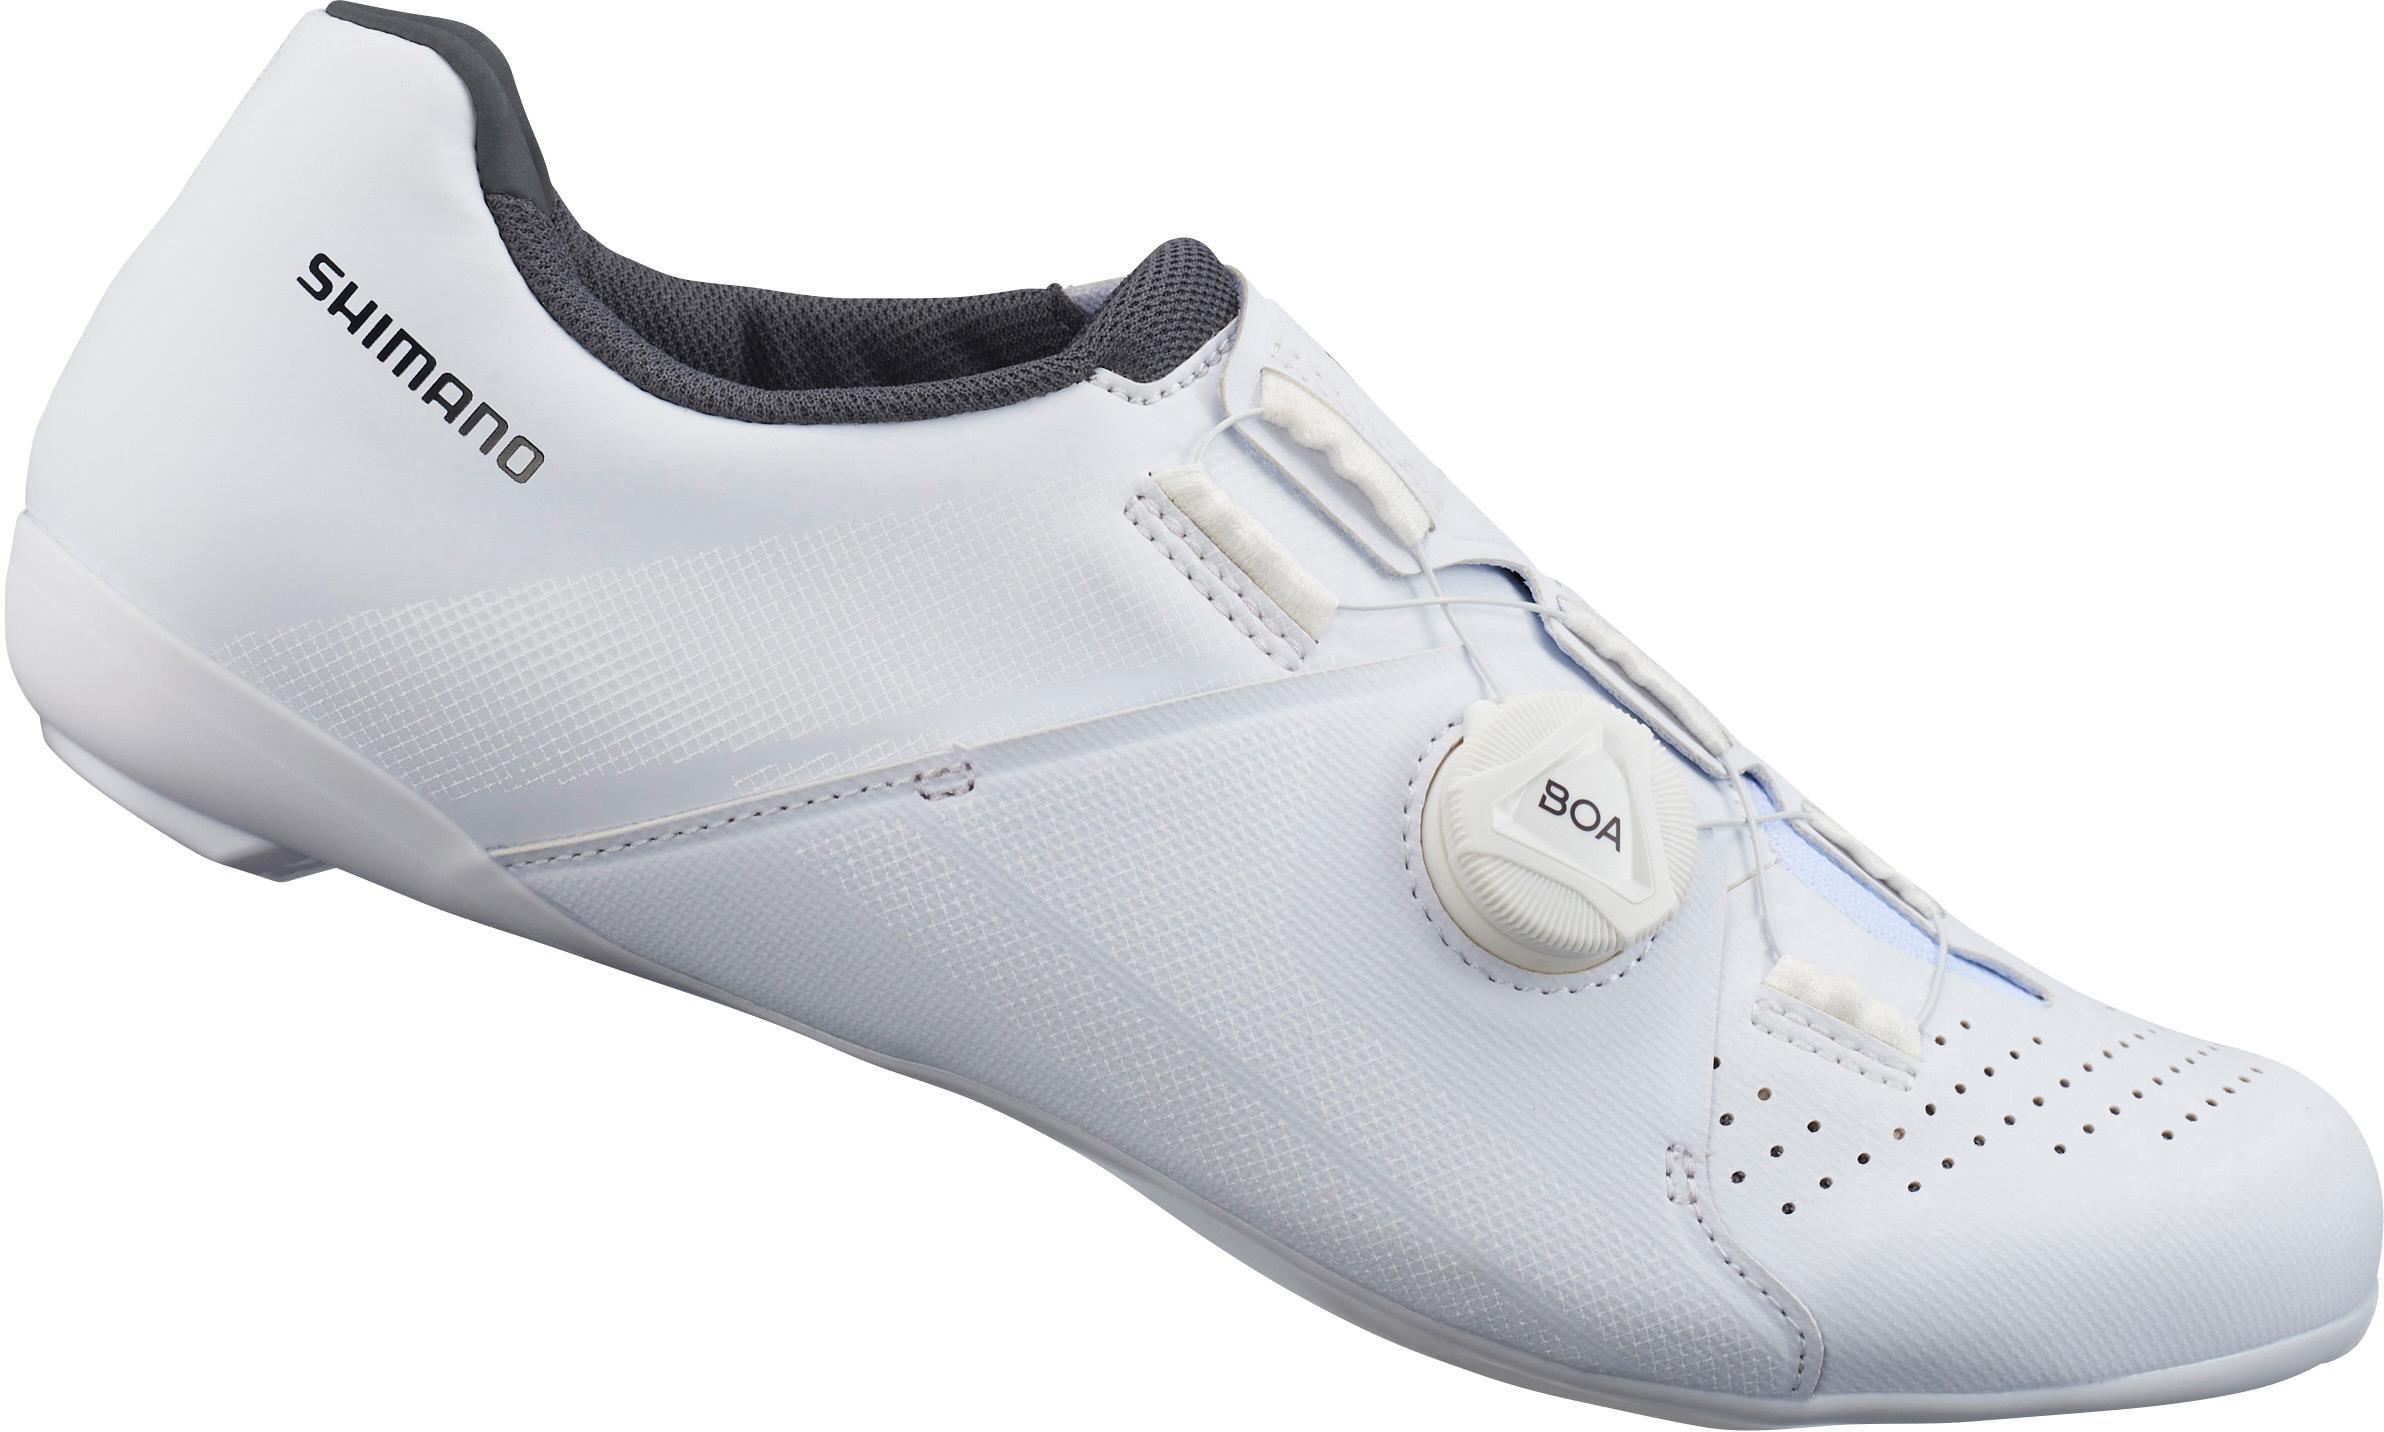 Shimano Rc3 Shoe Women's, White 40